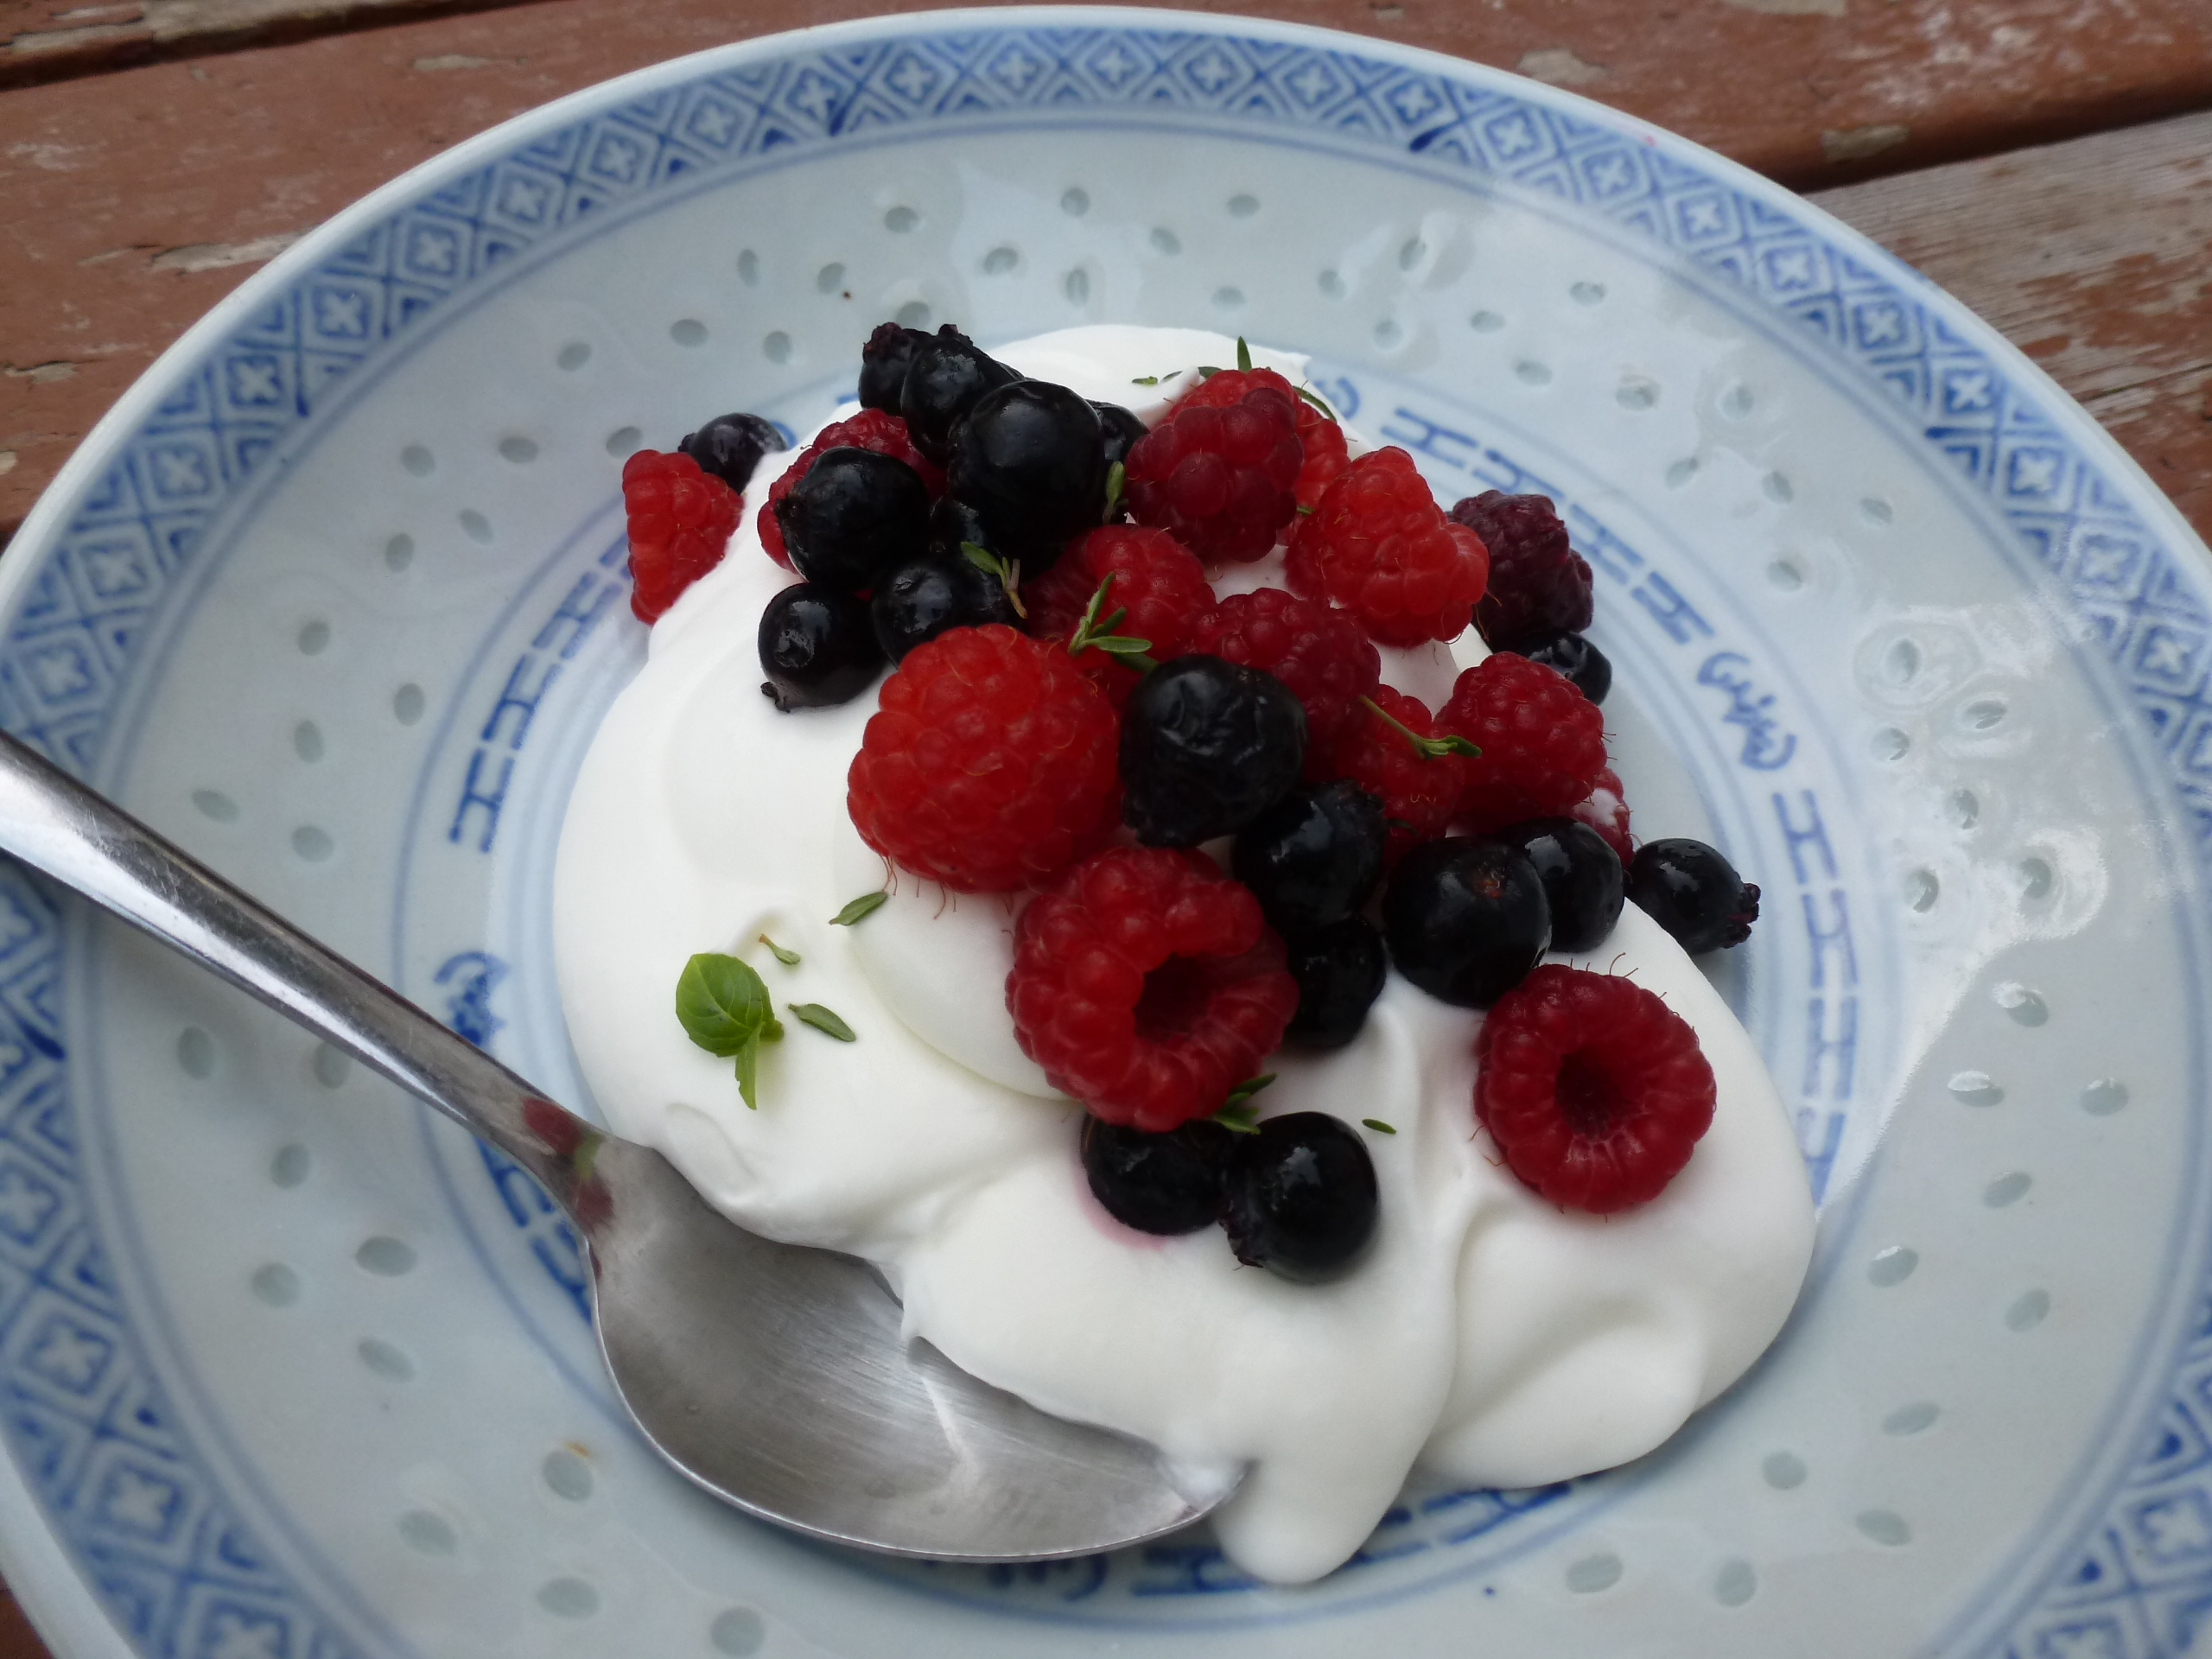 "Berries and Cream": saskatoons, raspberries, whipped posset, basil, thyme